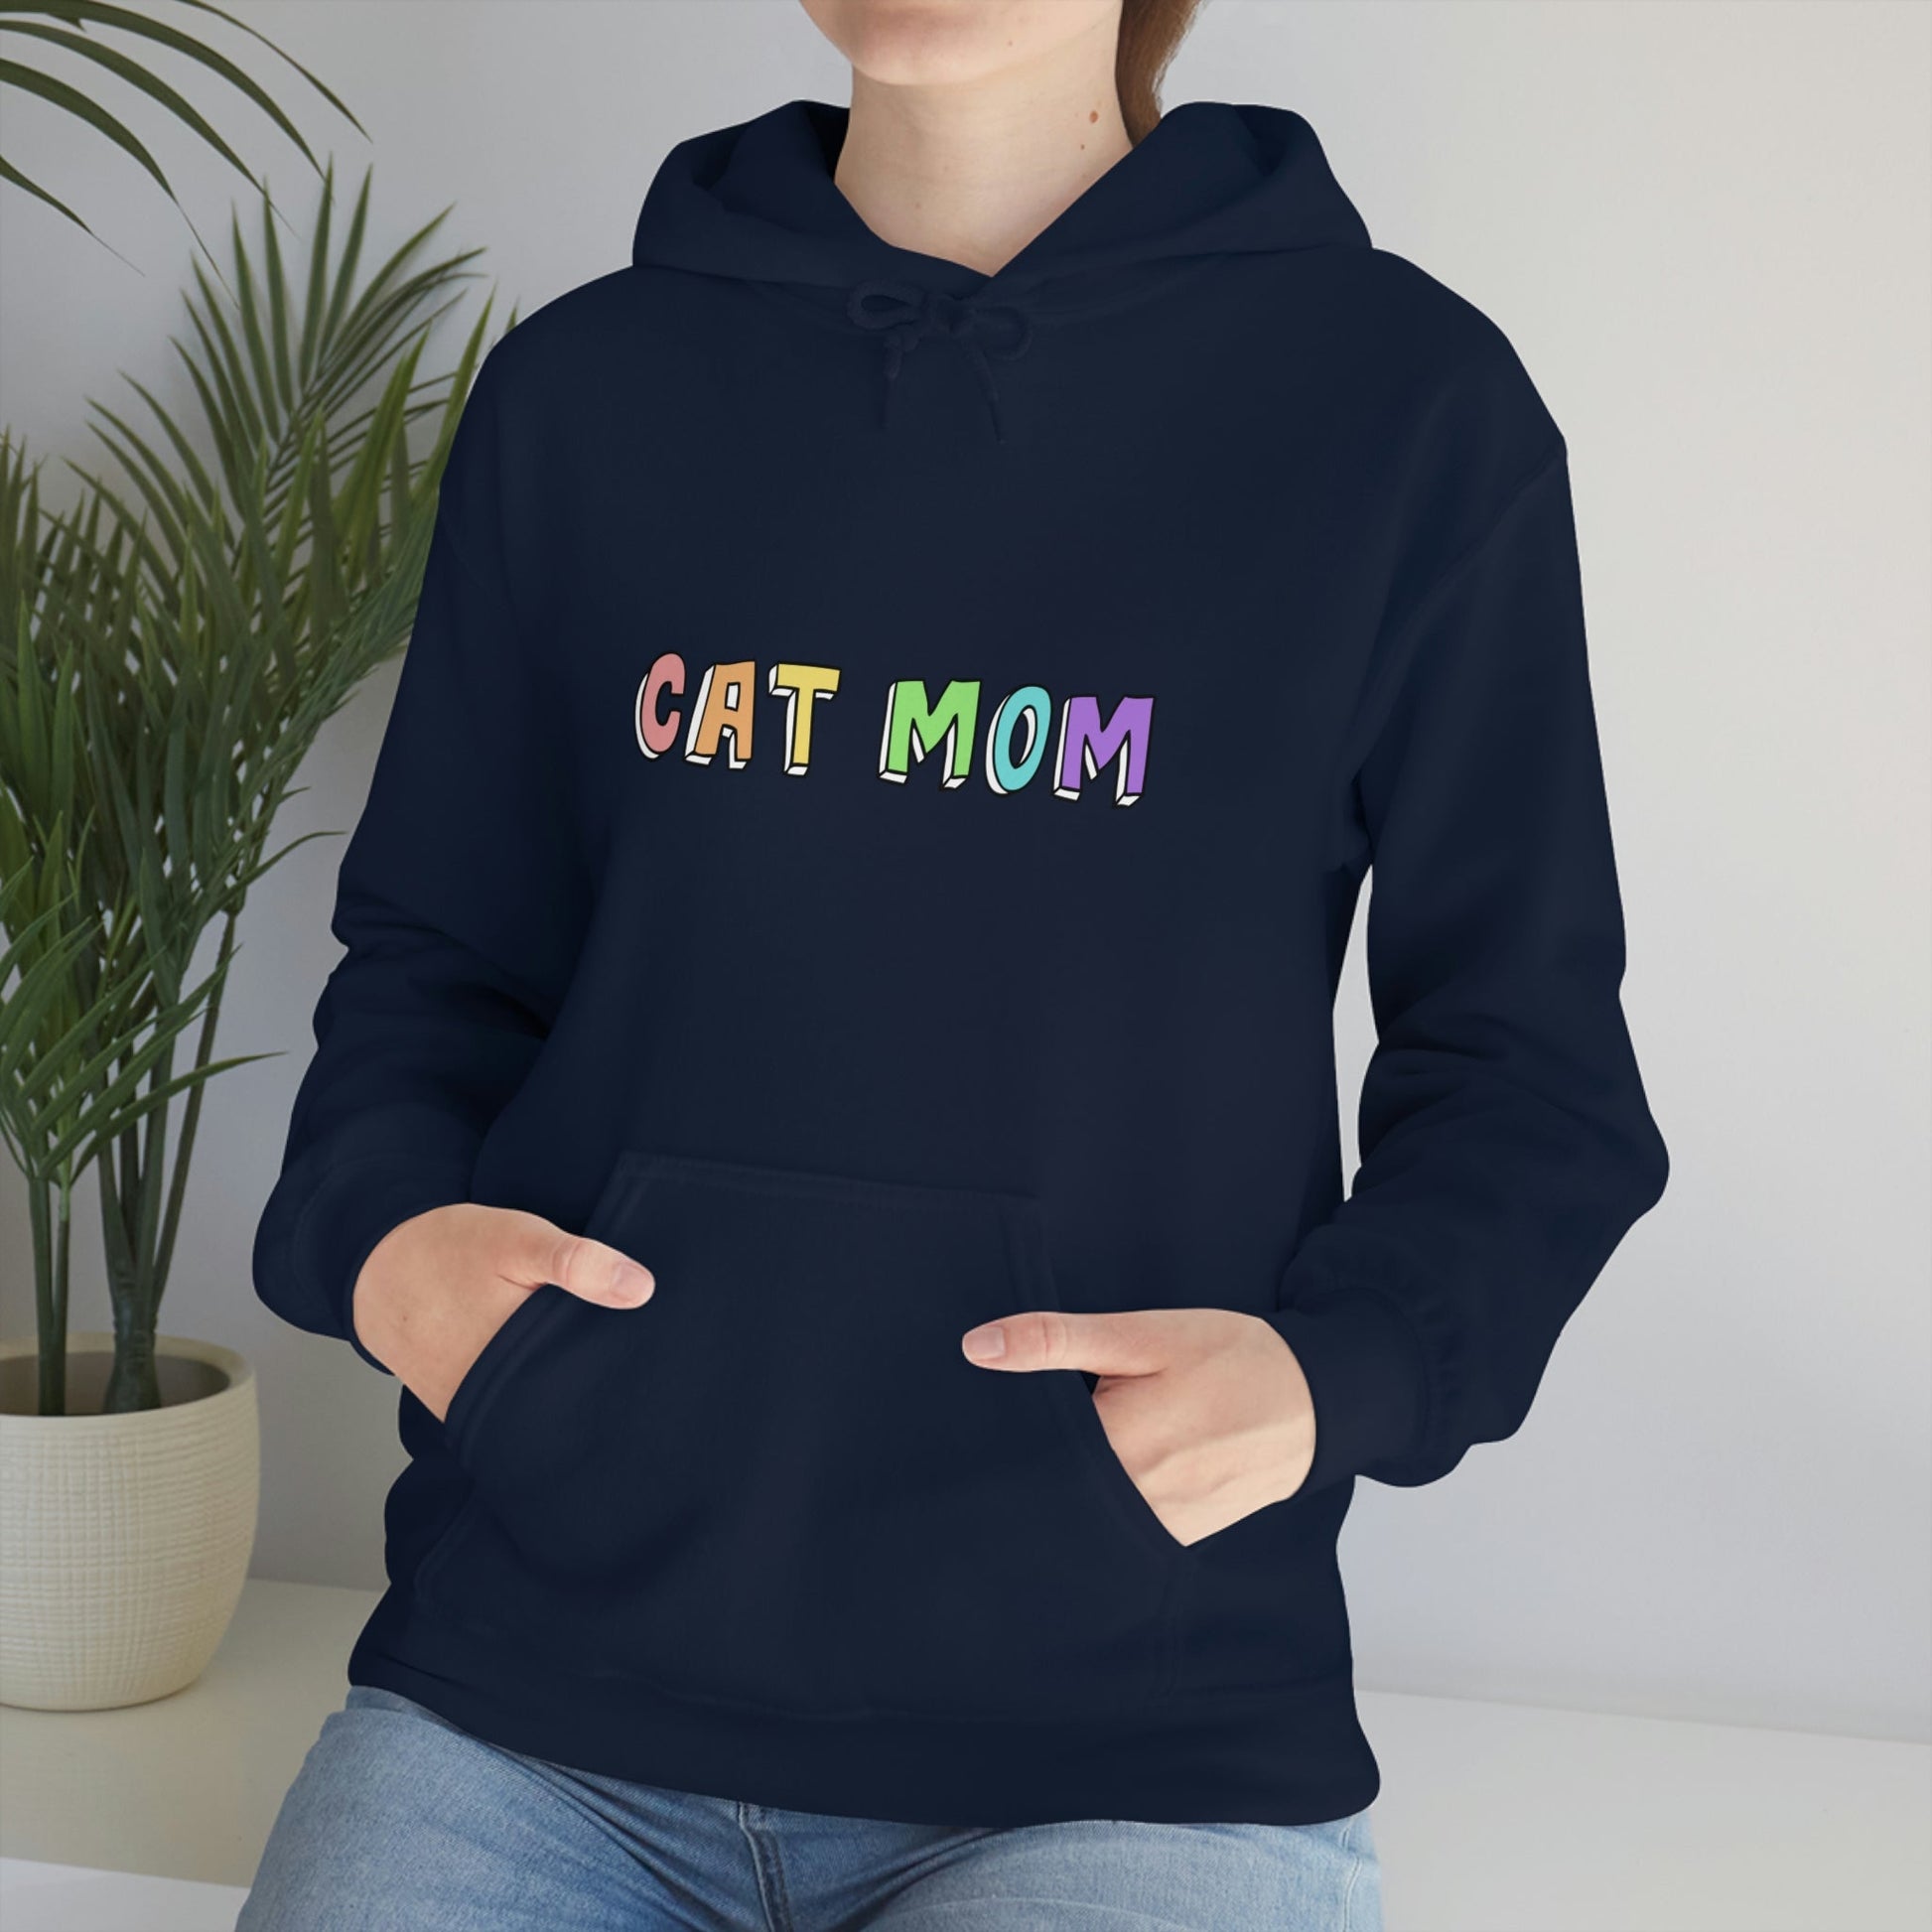 Cat Mom | Hooded Sweatshirt - Detezi Designs-22335185994440414657